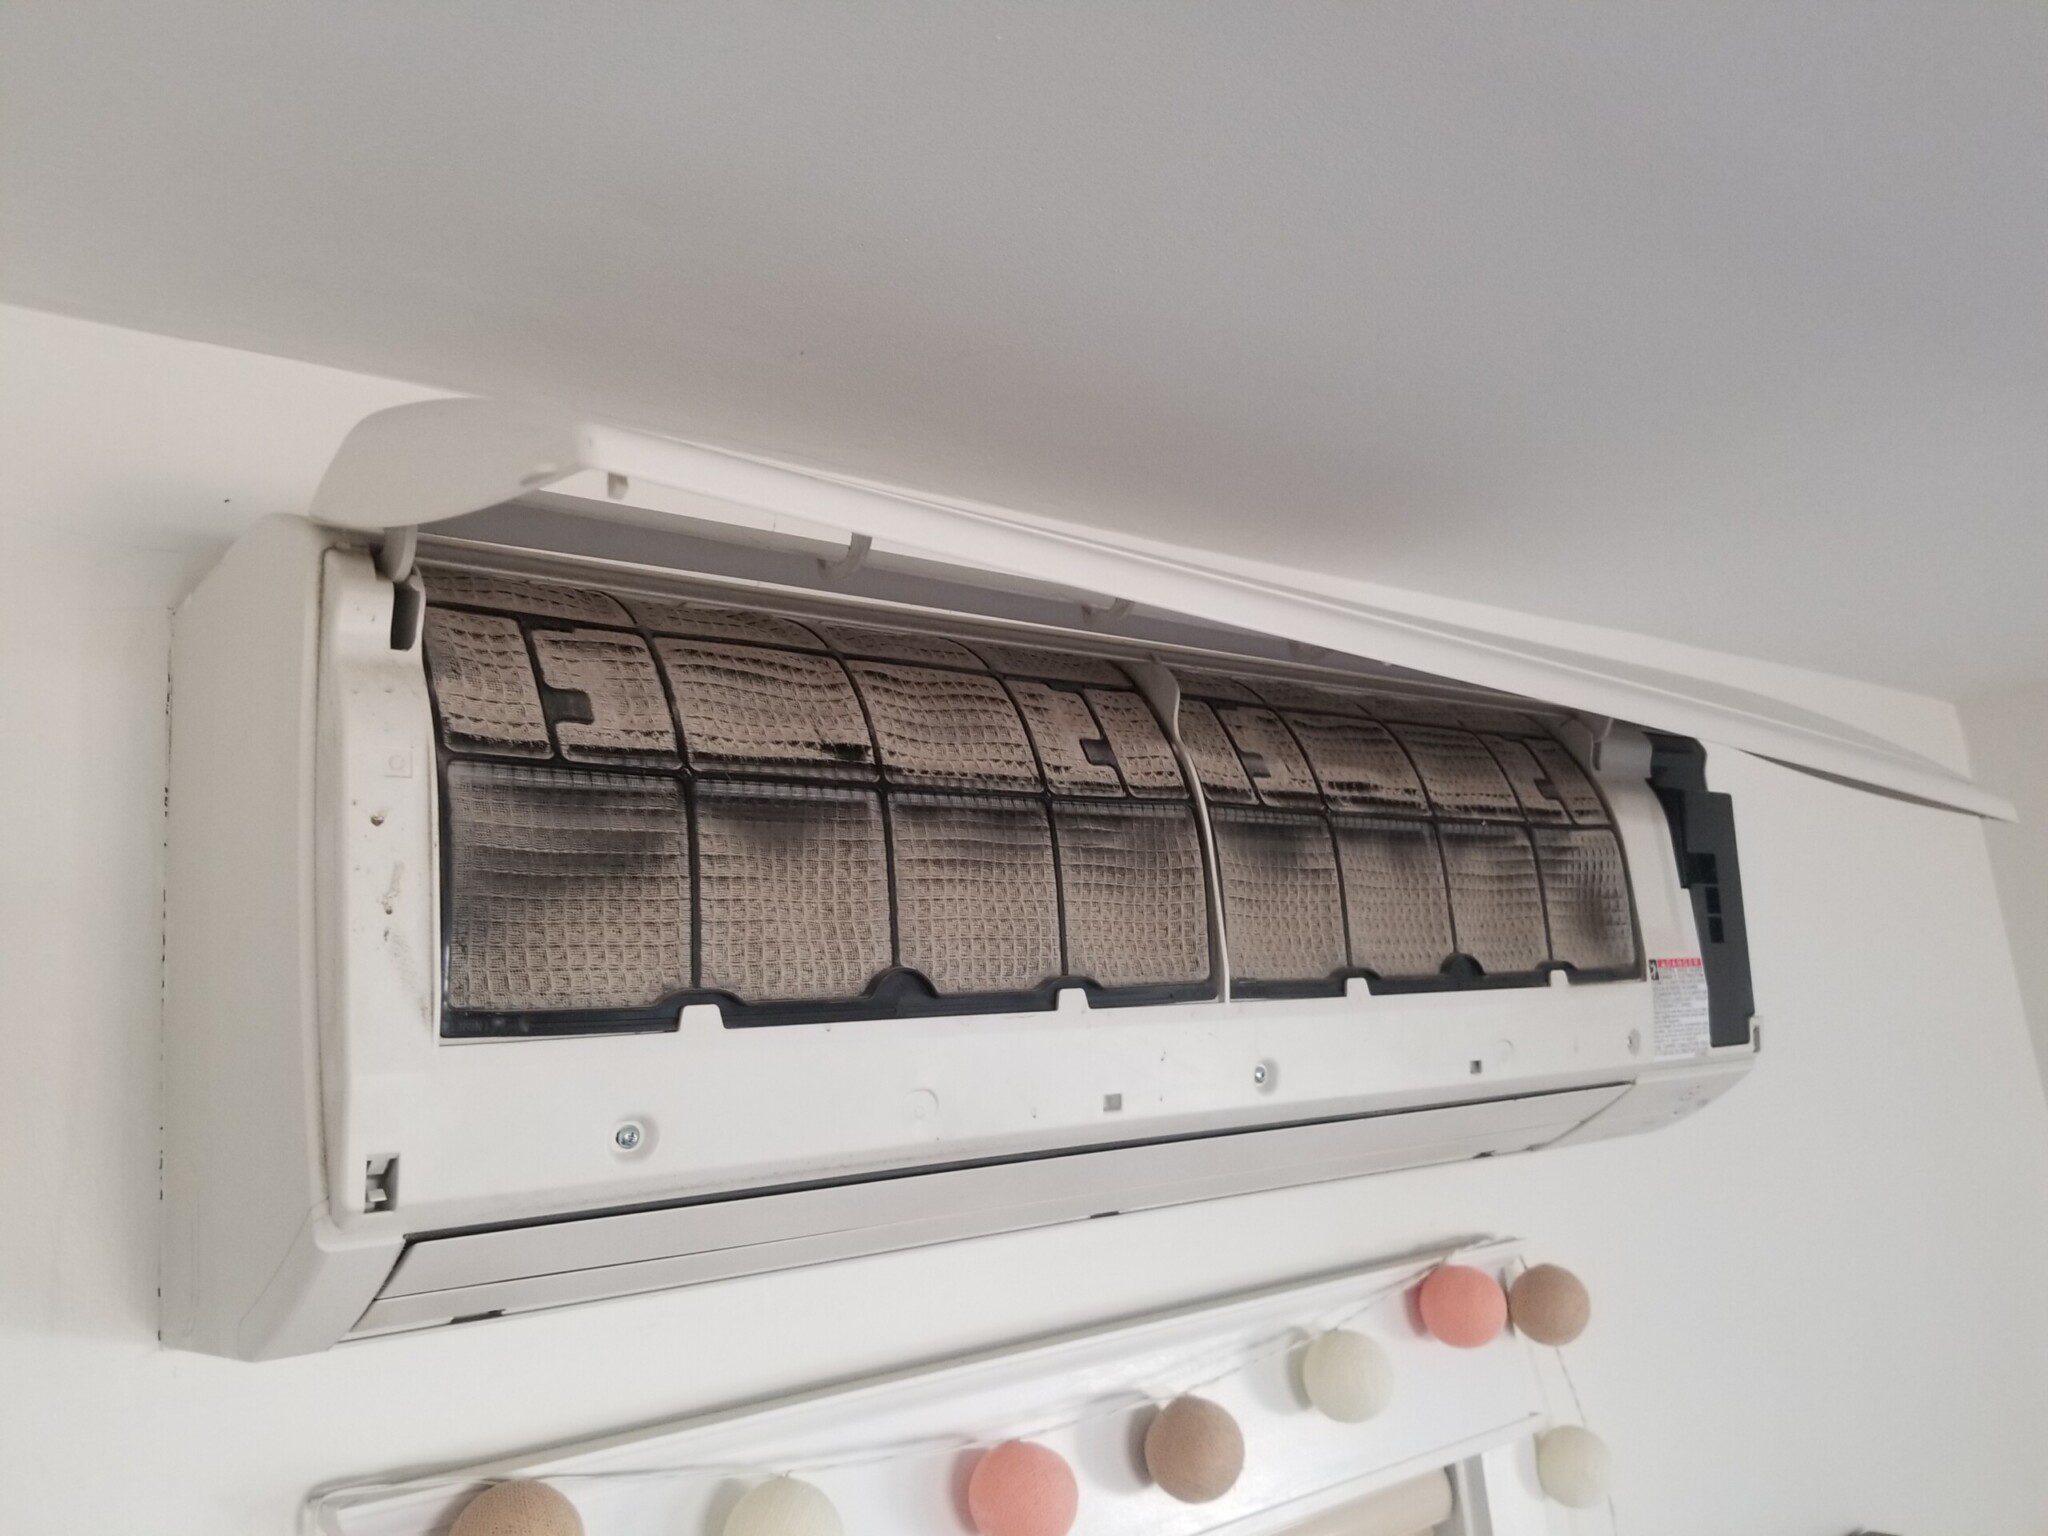 Heat Pump Dirty Filter - Nonprofit Home Inspections